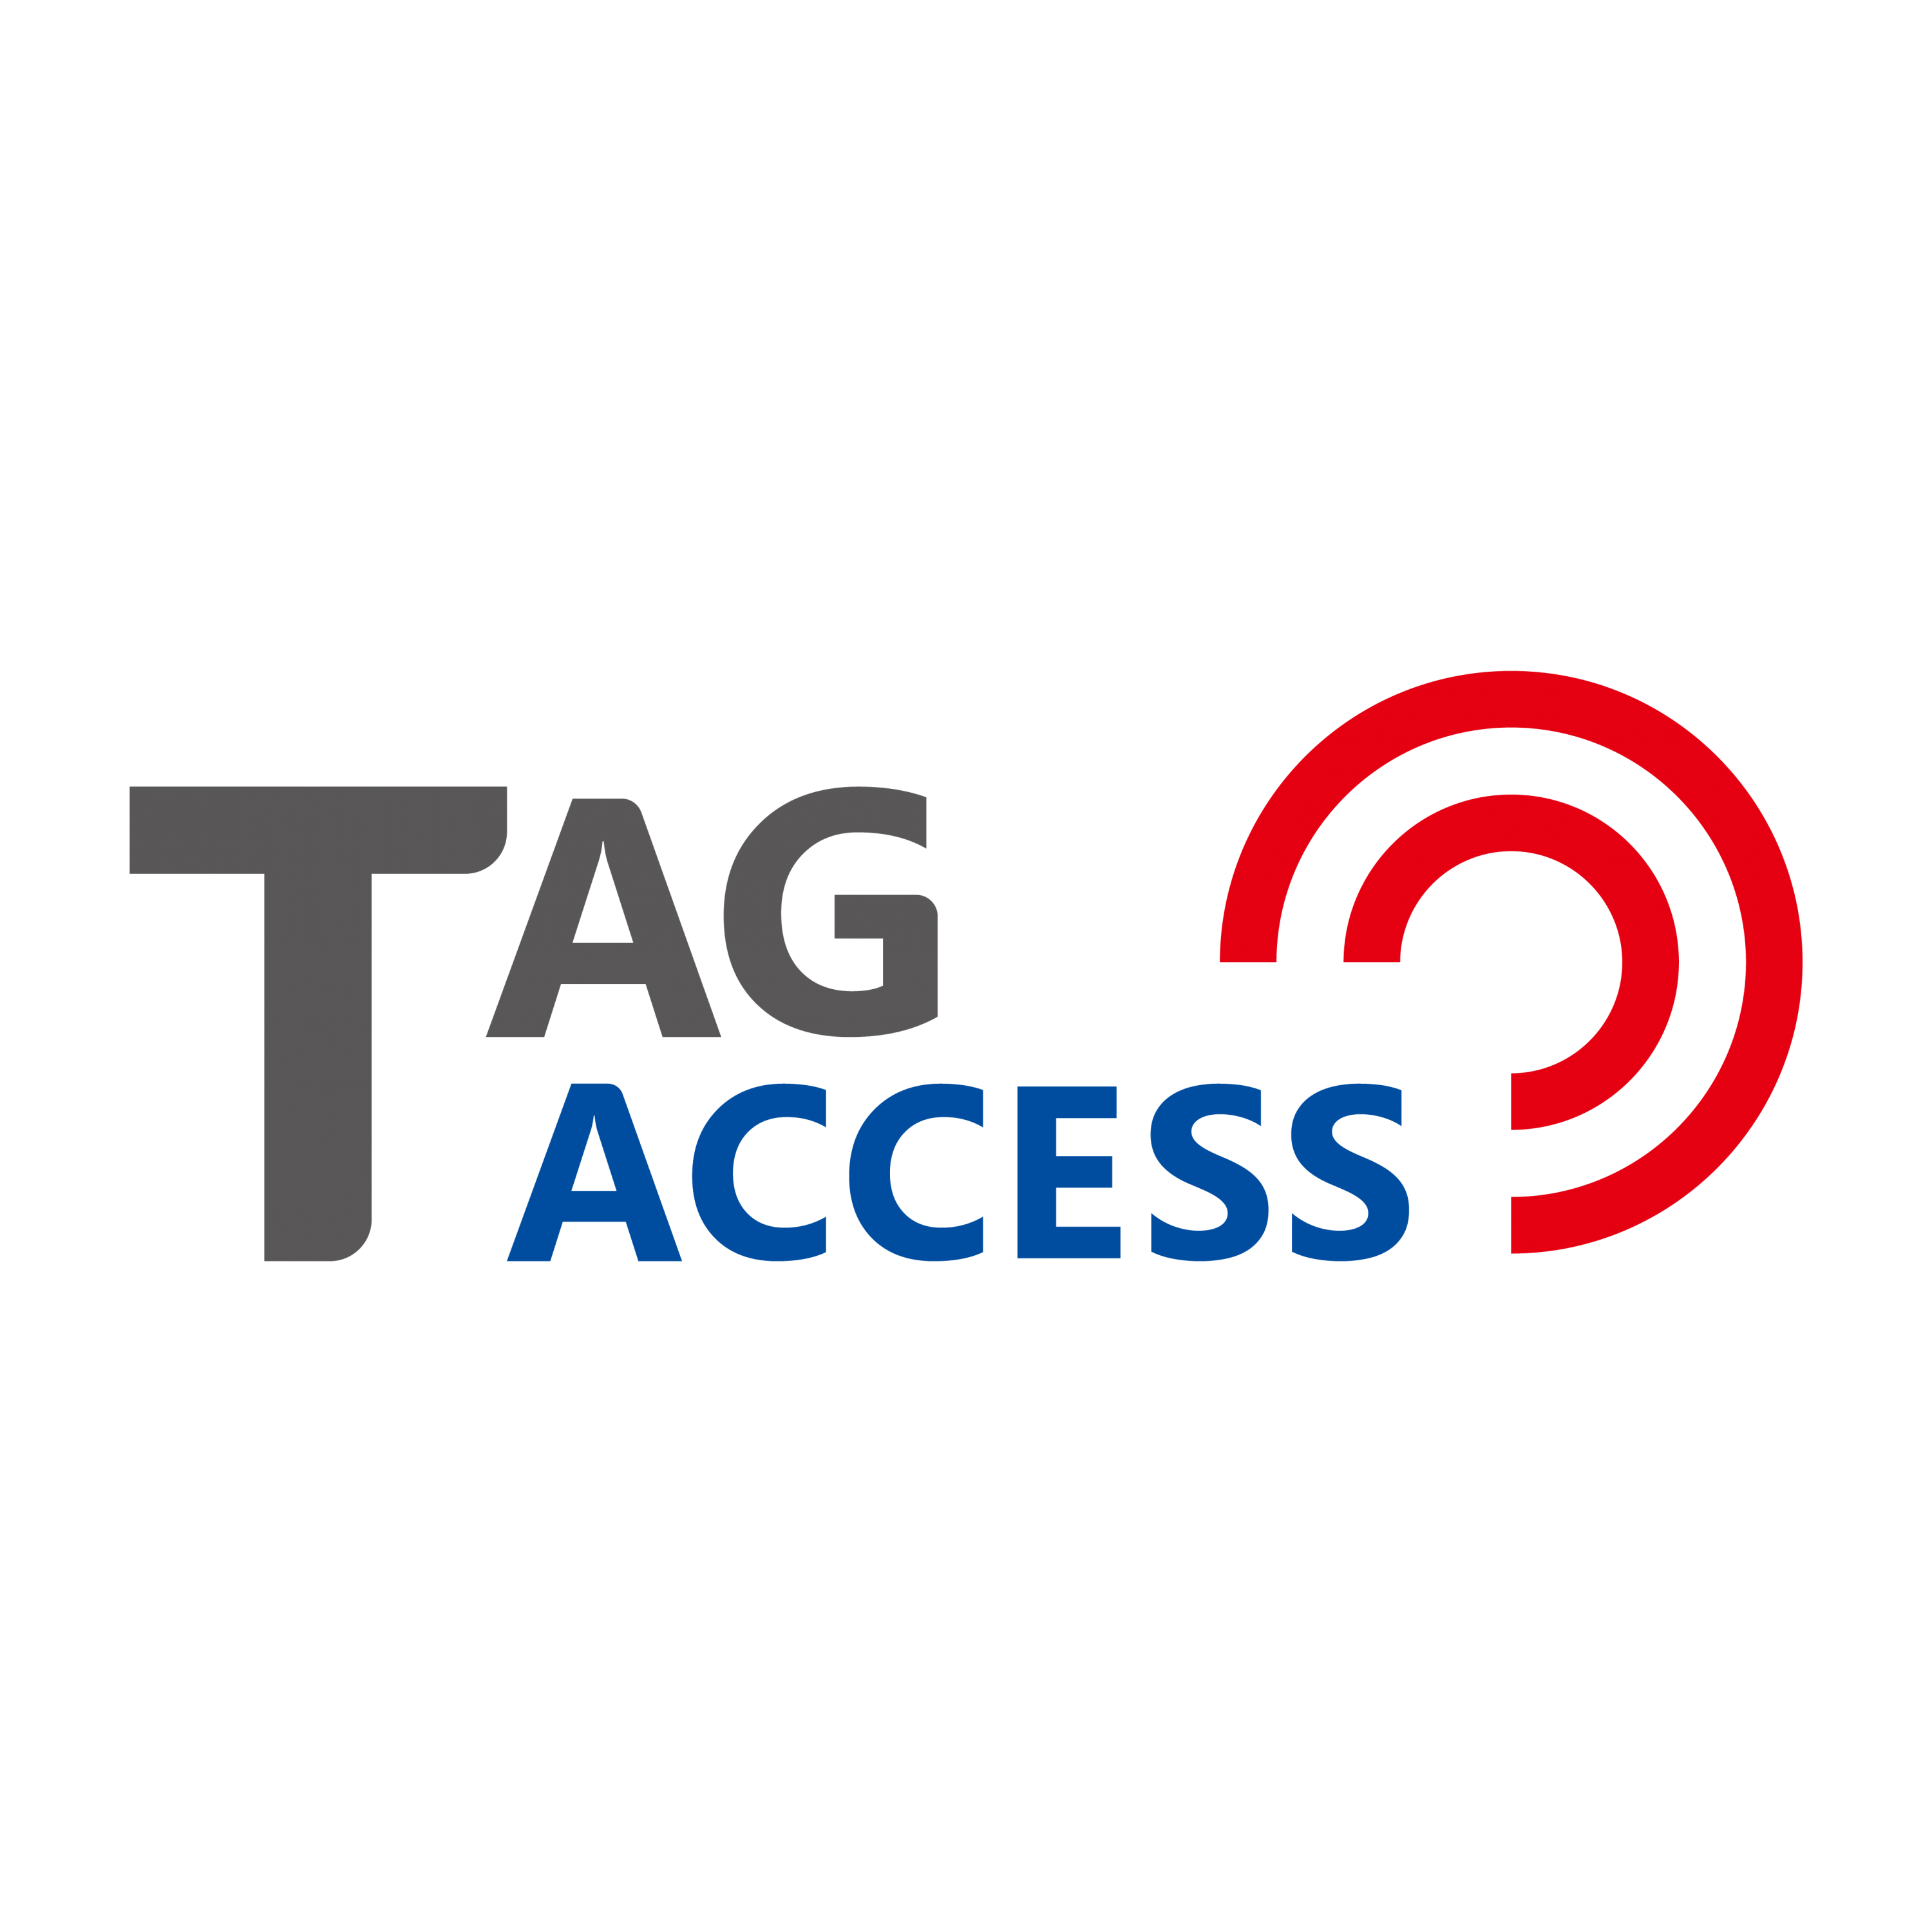 TagAccess logo